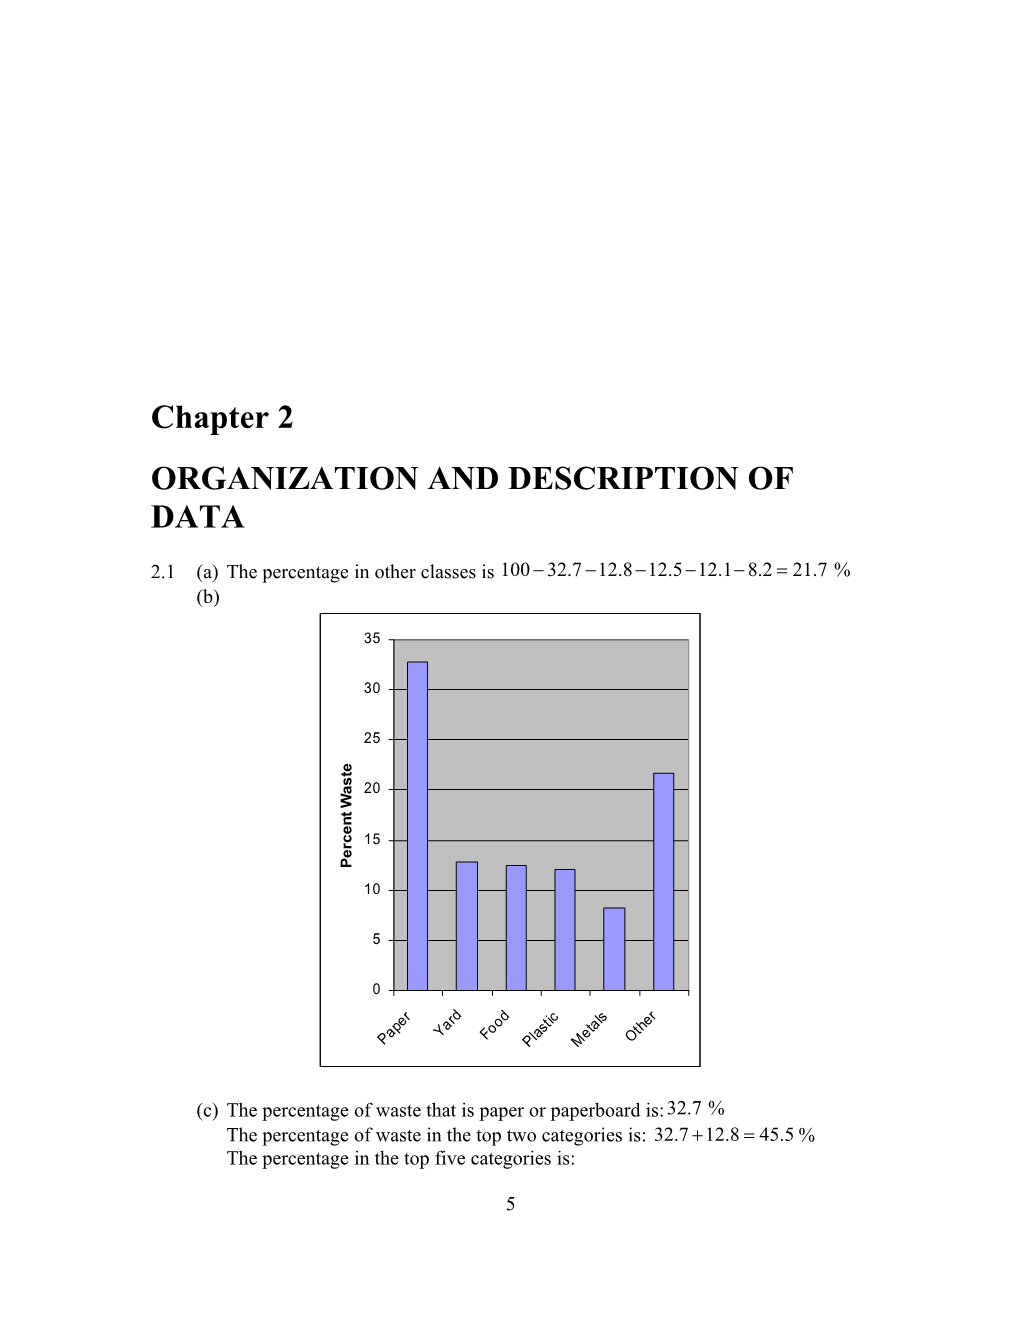 Organization and Description Of